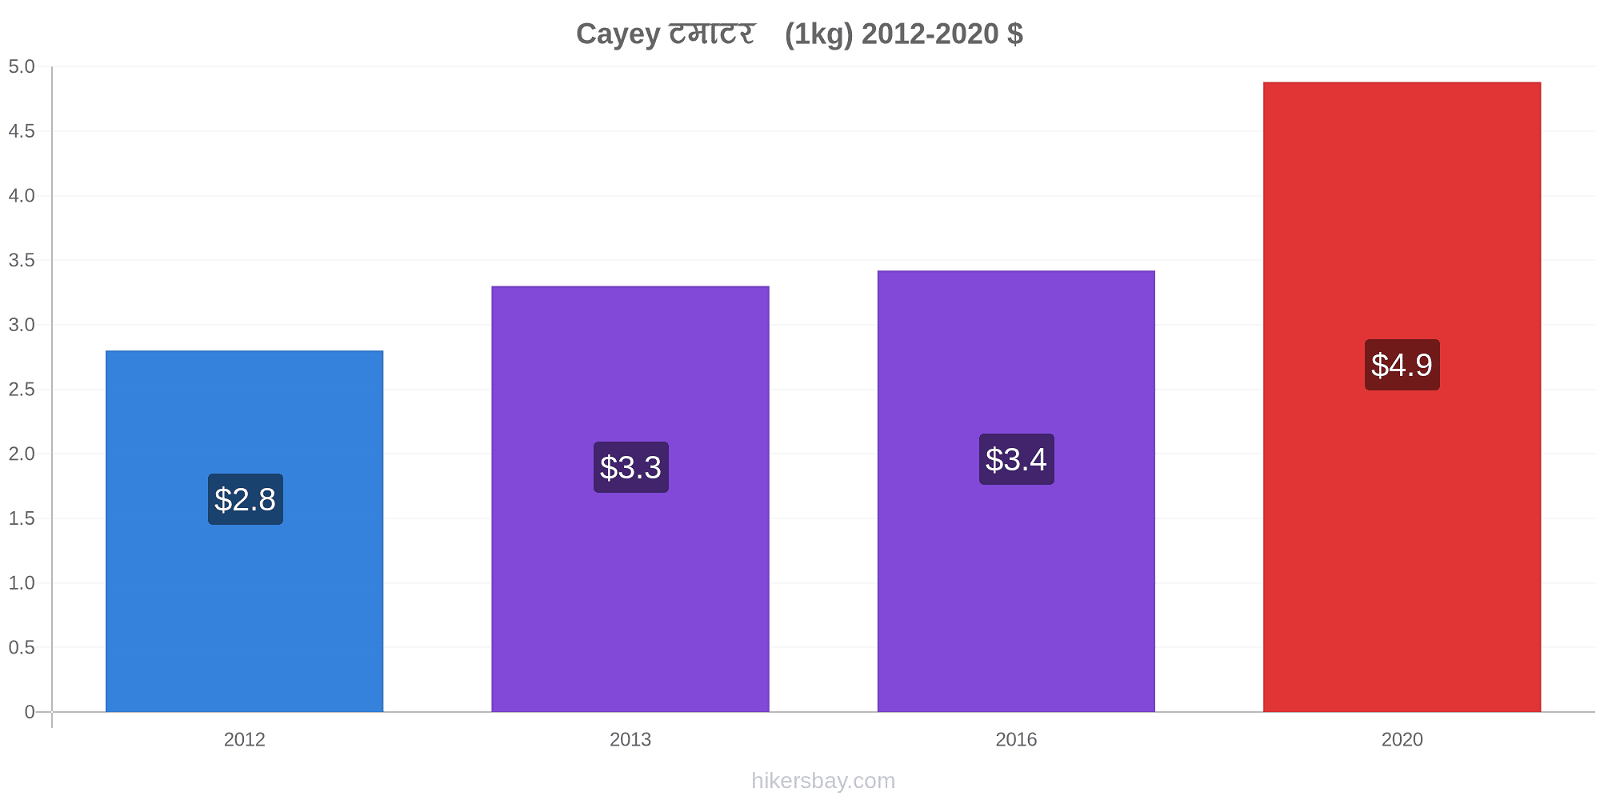 Cayey मूल्य परिवर्तन टमाटर (1kg) hikersbay.com